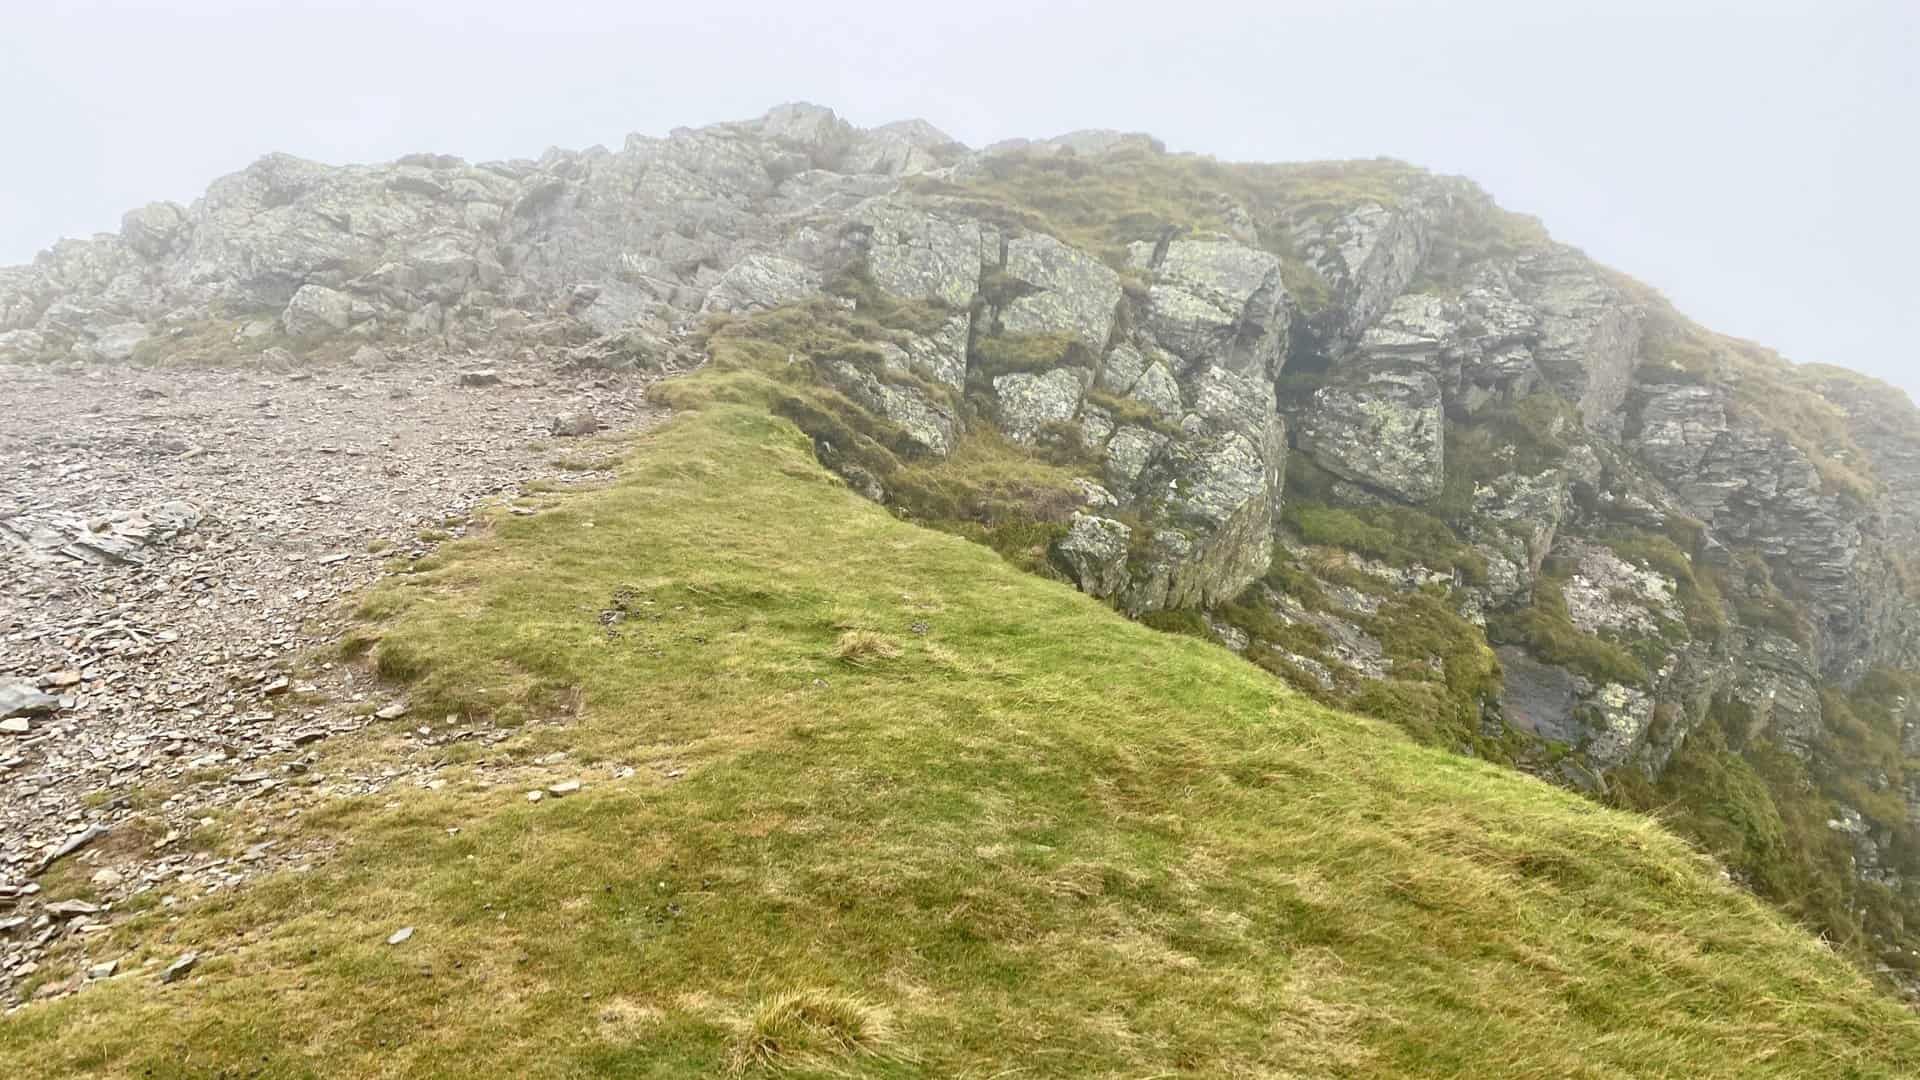 The summit of Hopegill Head, height 770 metres (2526 feet).  The second Wainwright peak of the Coledale Horseshoe.